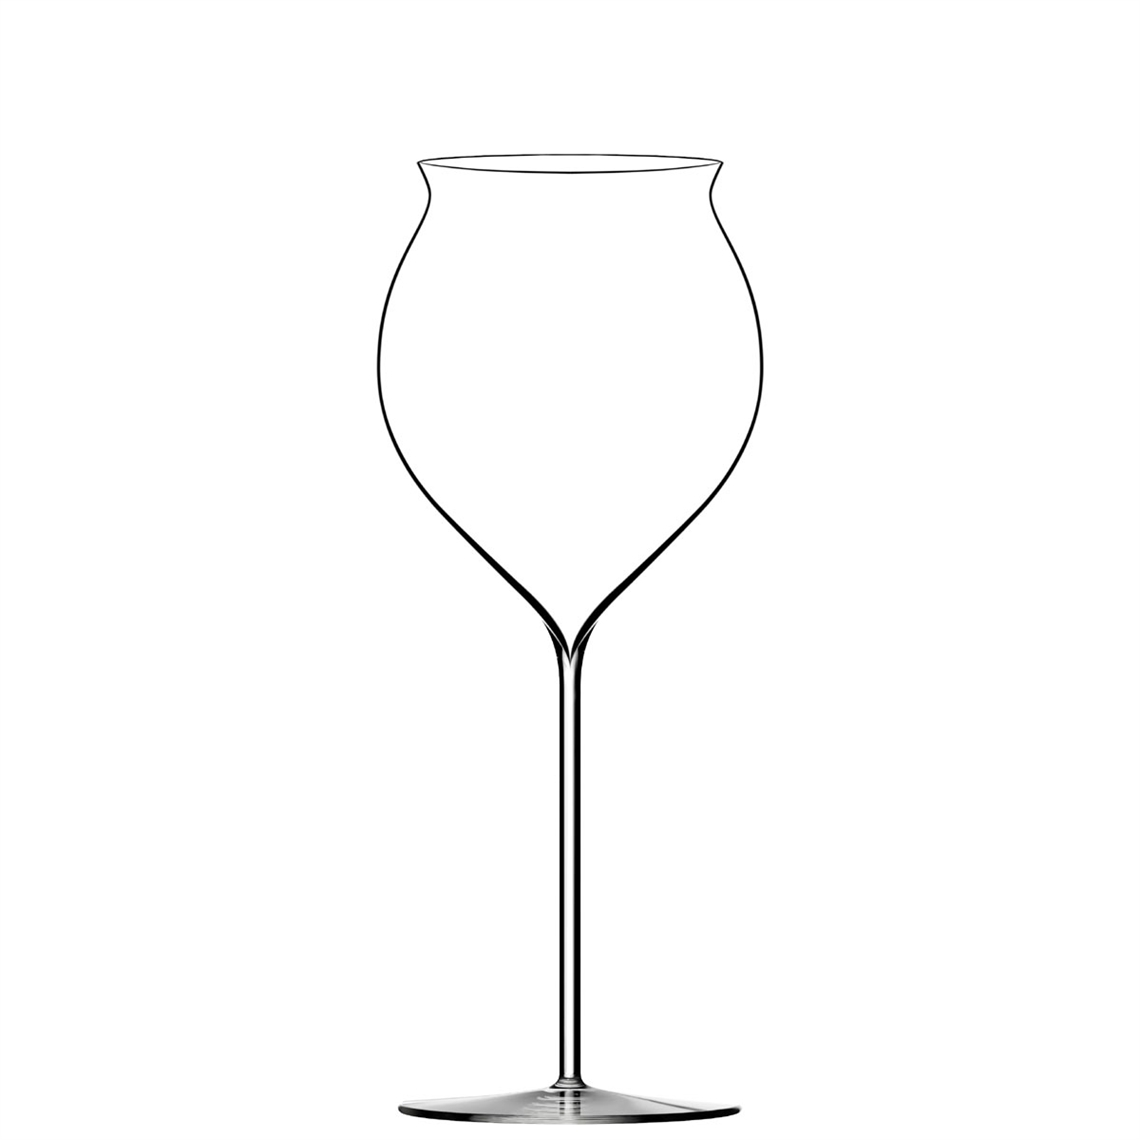 Lehmann Glass Jamesse Prestige Synergie Sake & Spirits Glass 400ml - Set of 6